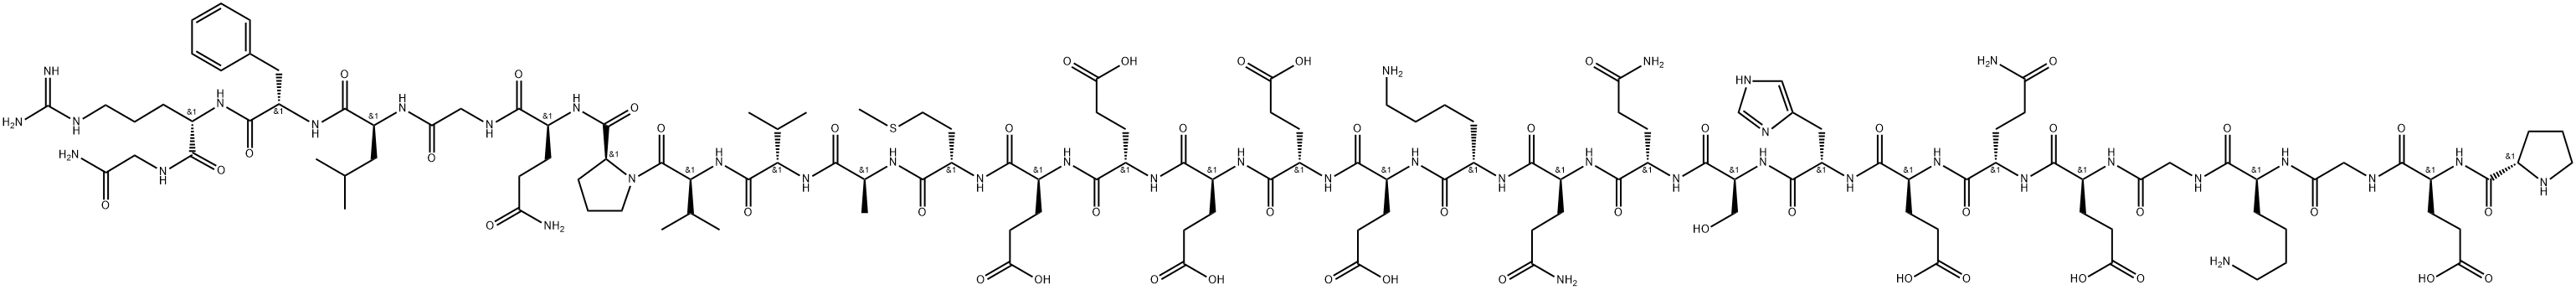 pancreastatin-29 Structure